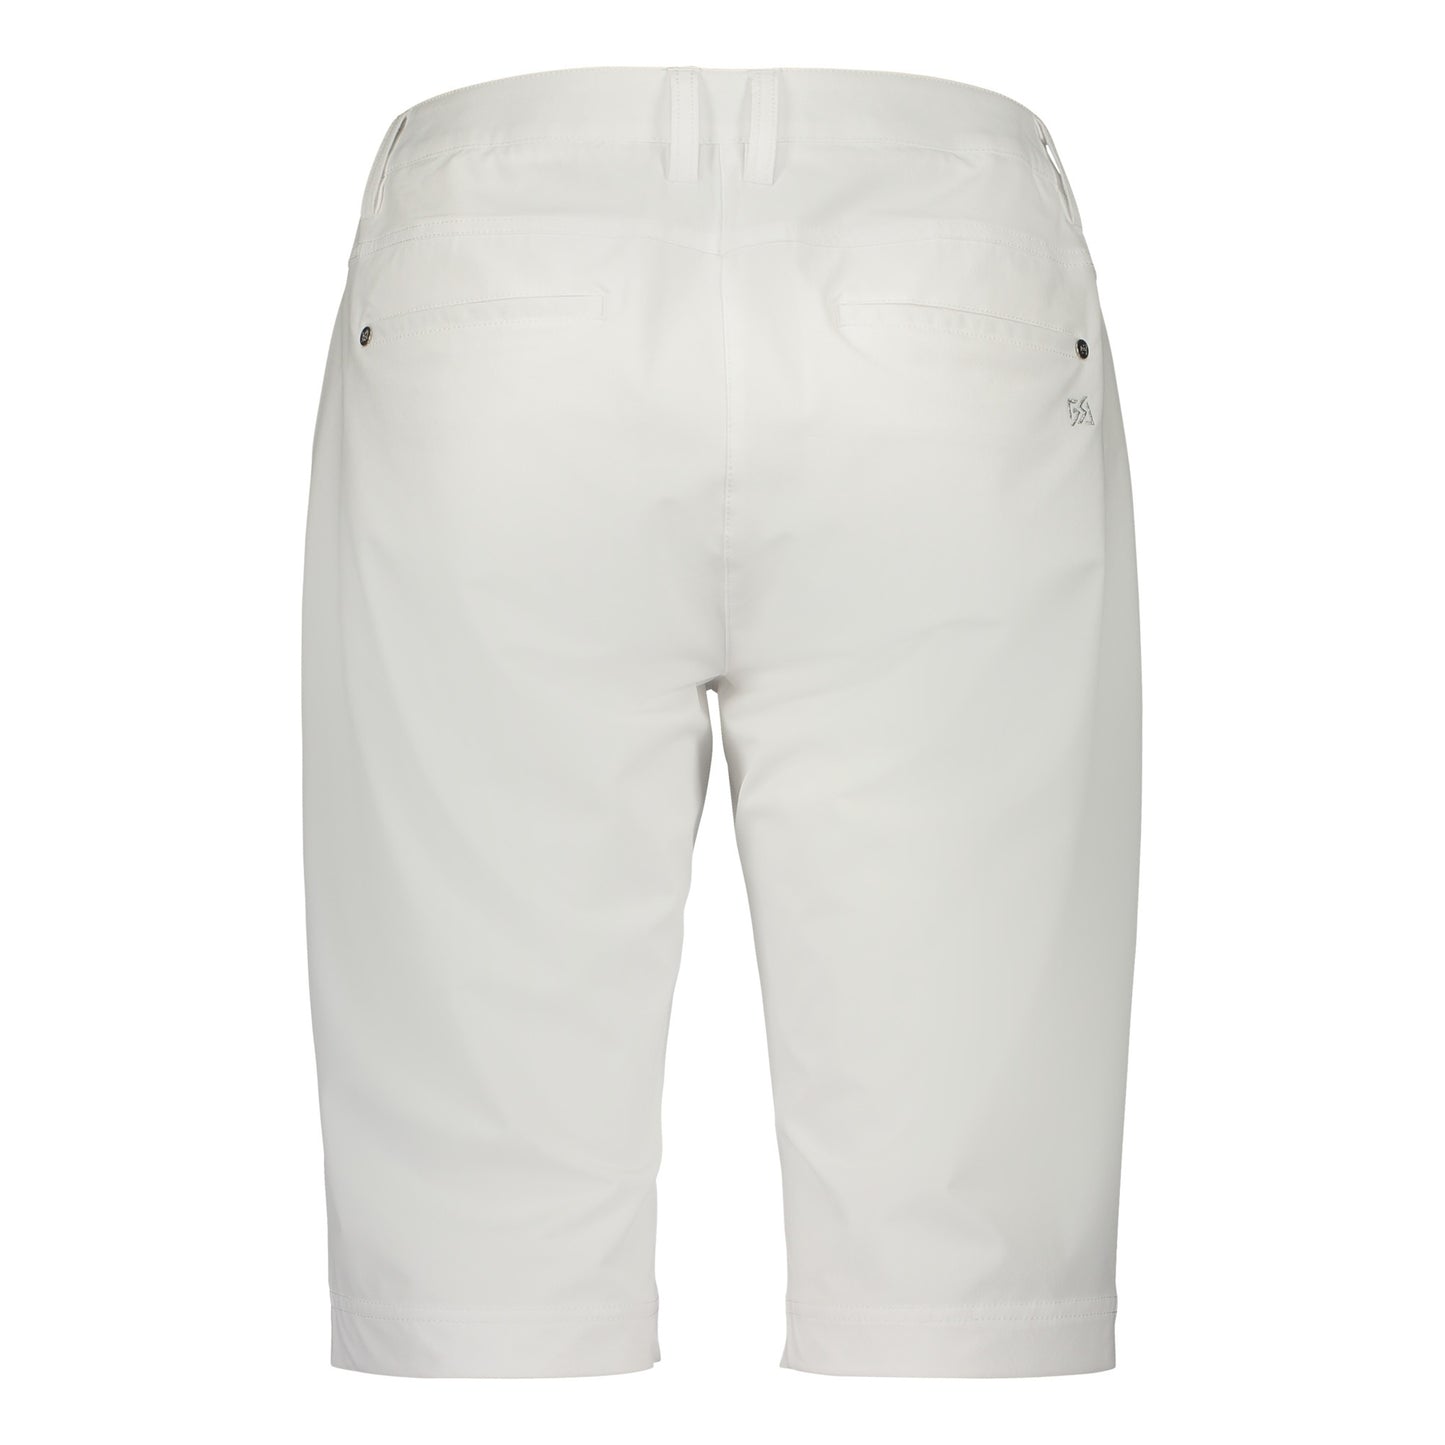 Catmandoo Seon Ladies Knee-Length Stretch Shorts White Product Image Rear